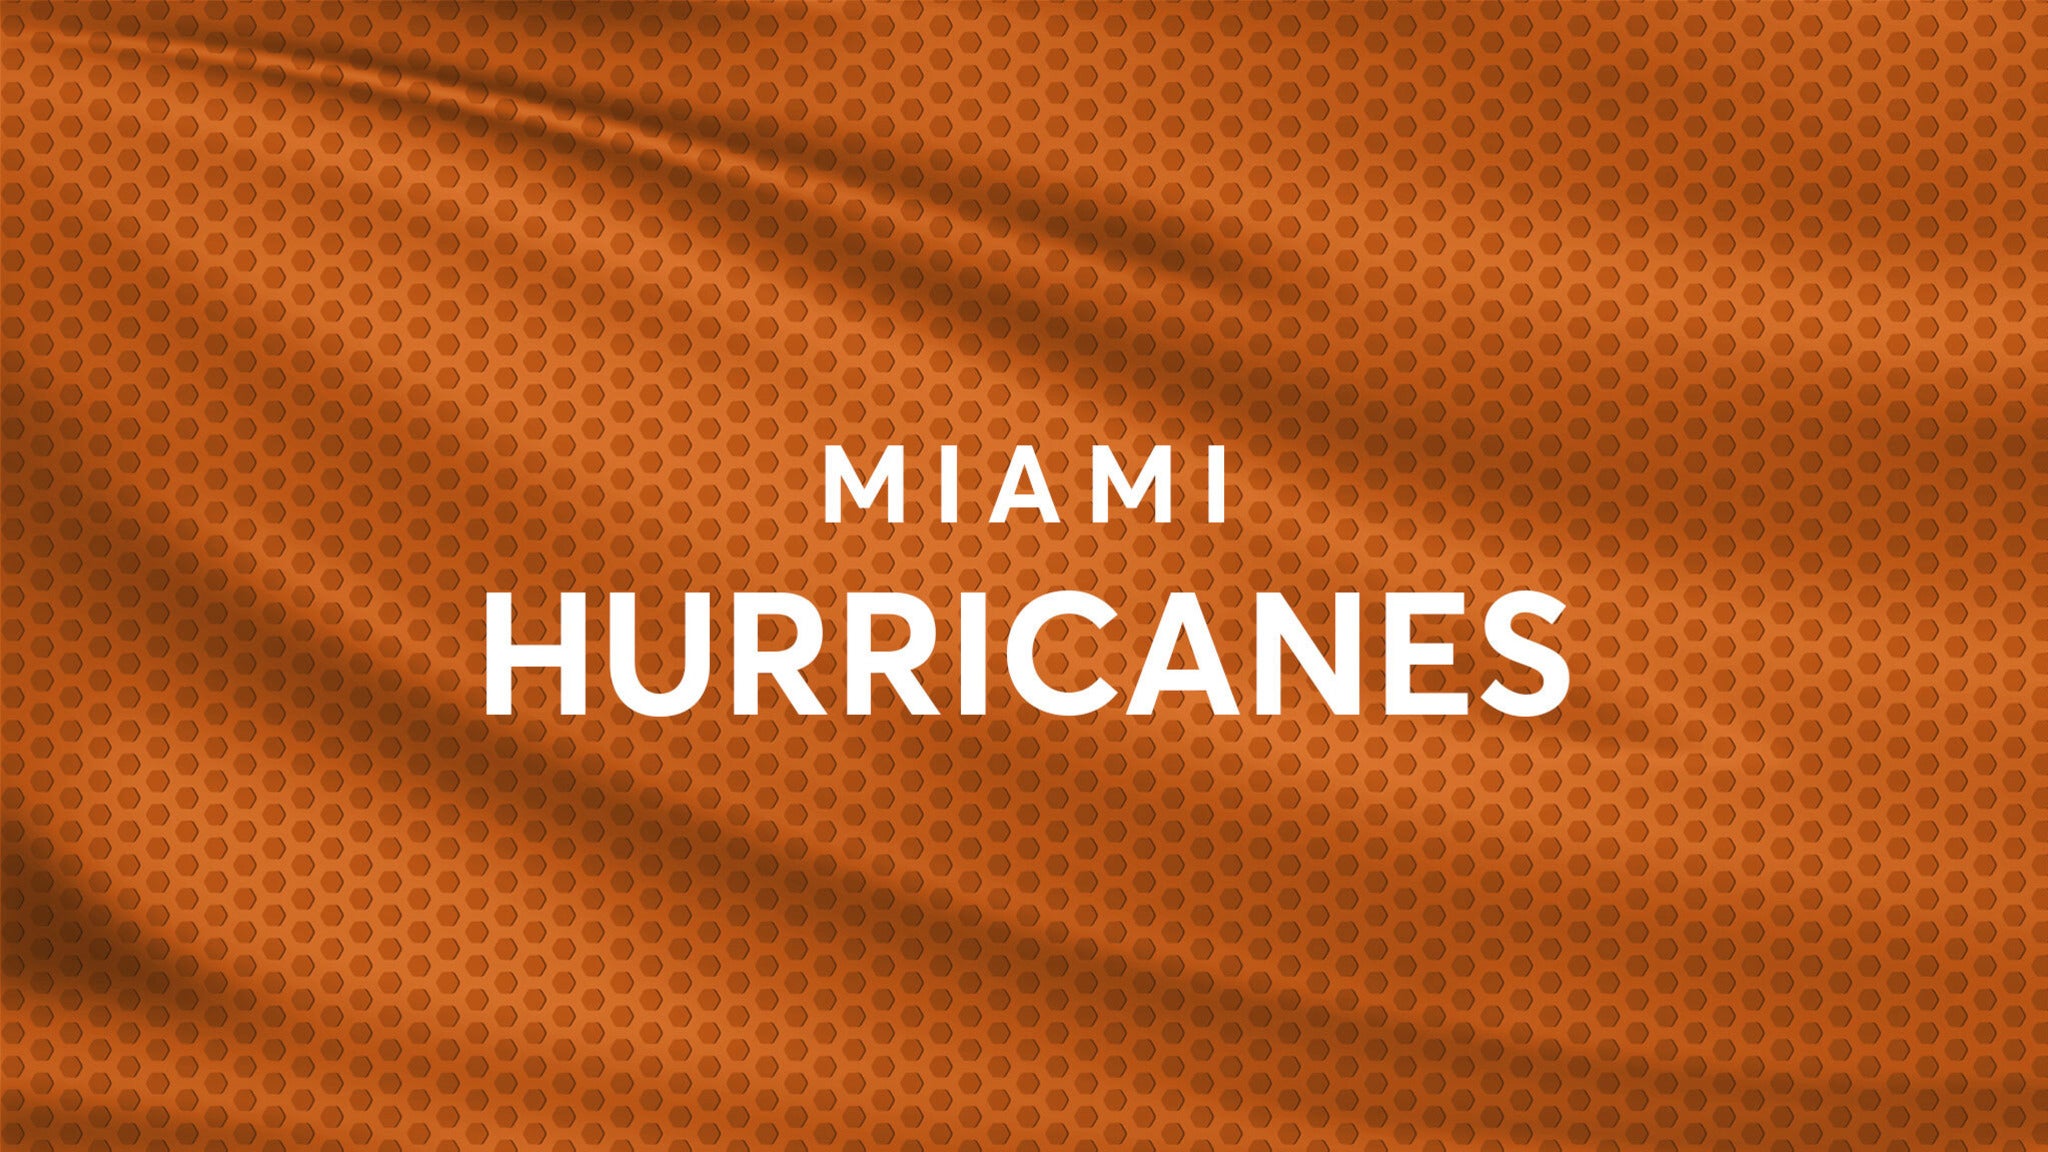 Miami Hurricanes Football vs. Pittsburgh Panthers Football